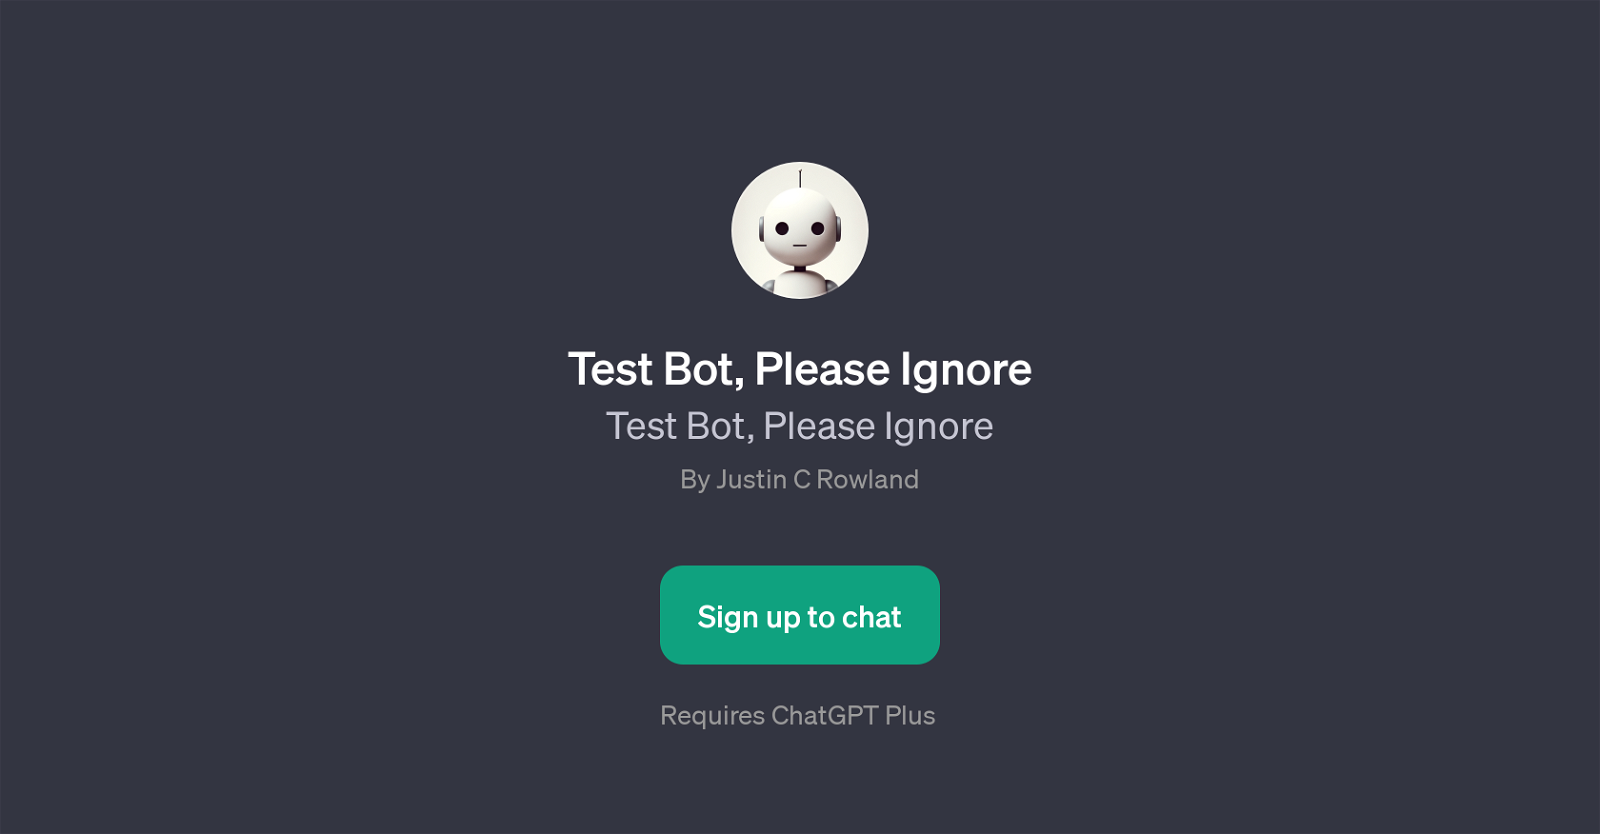 Test Bot, Please Ignore website